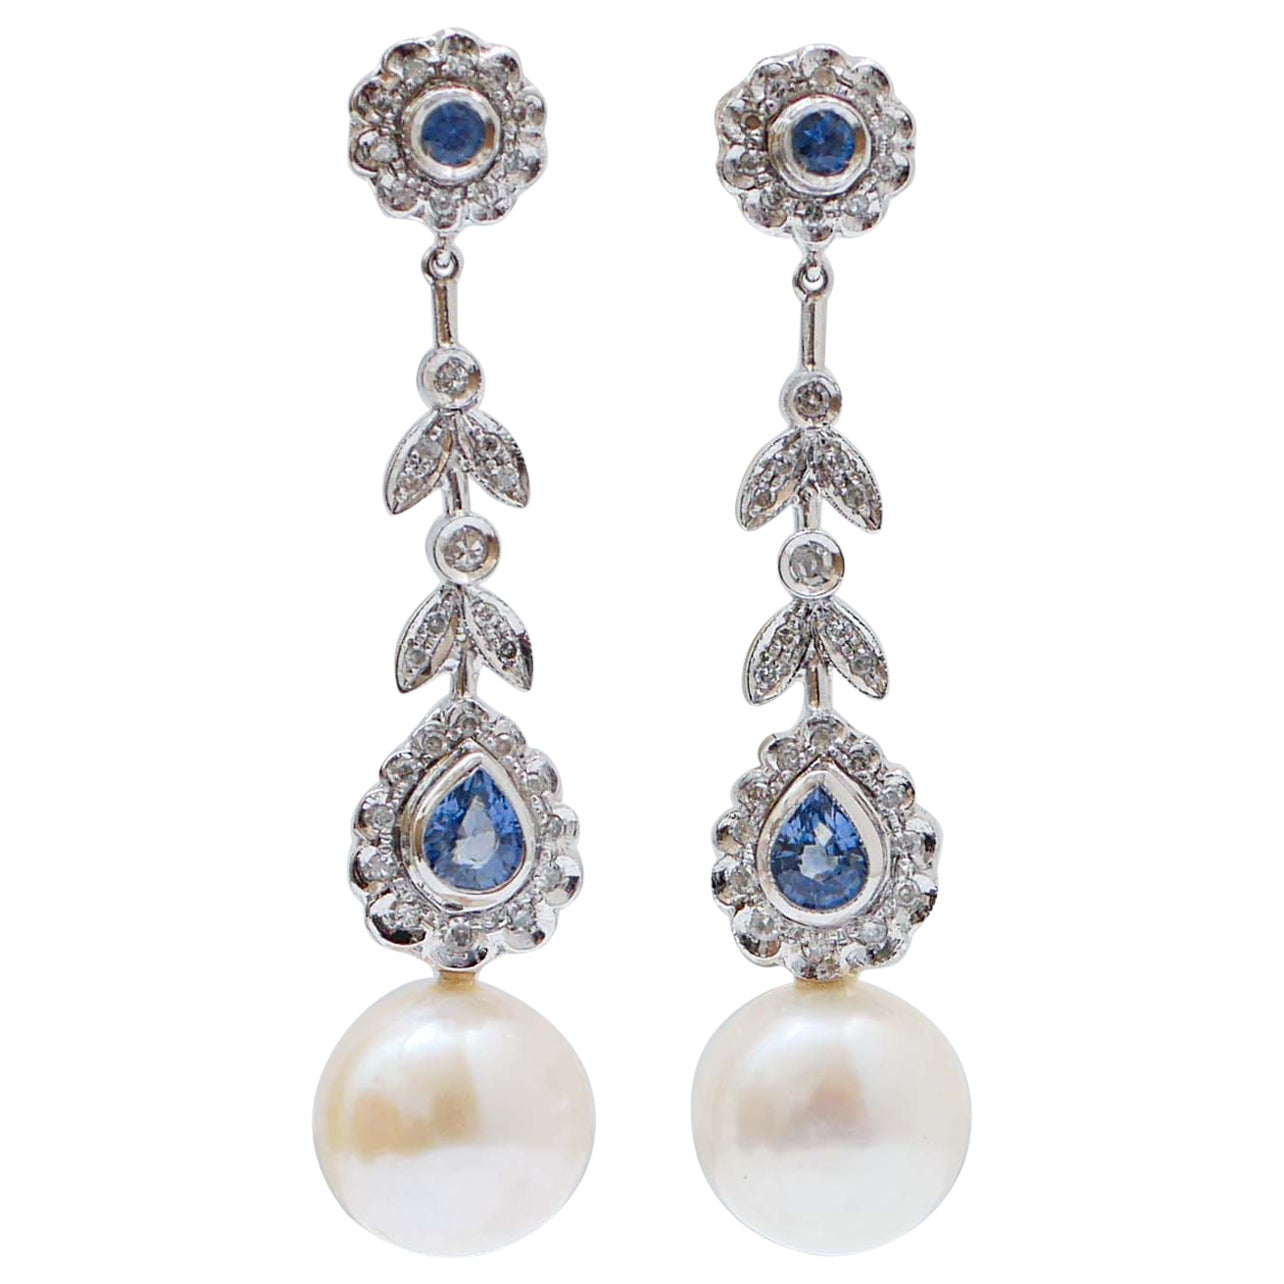 White Pearls, Sapphires, Diamonds, Platinum Earrings.